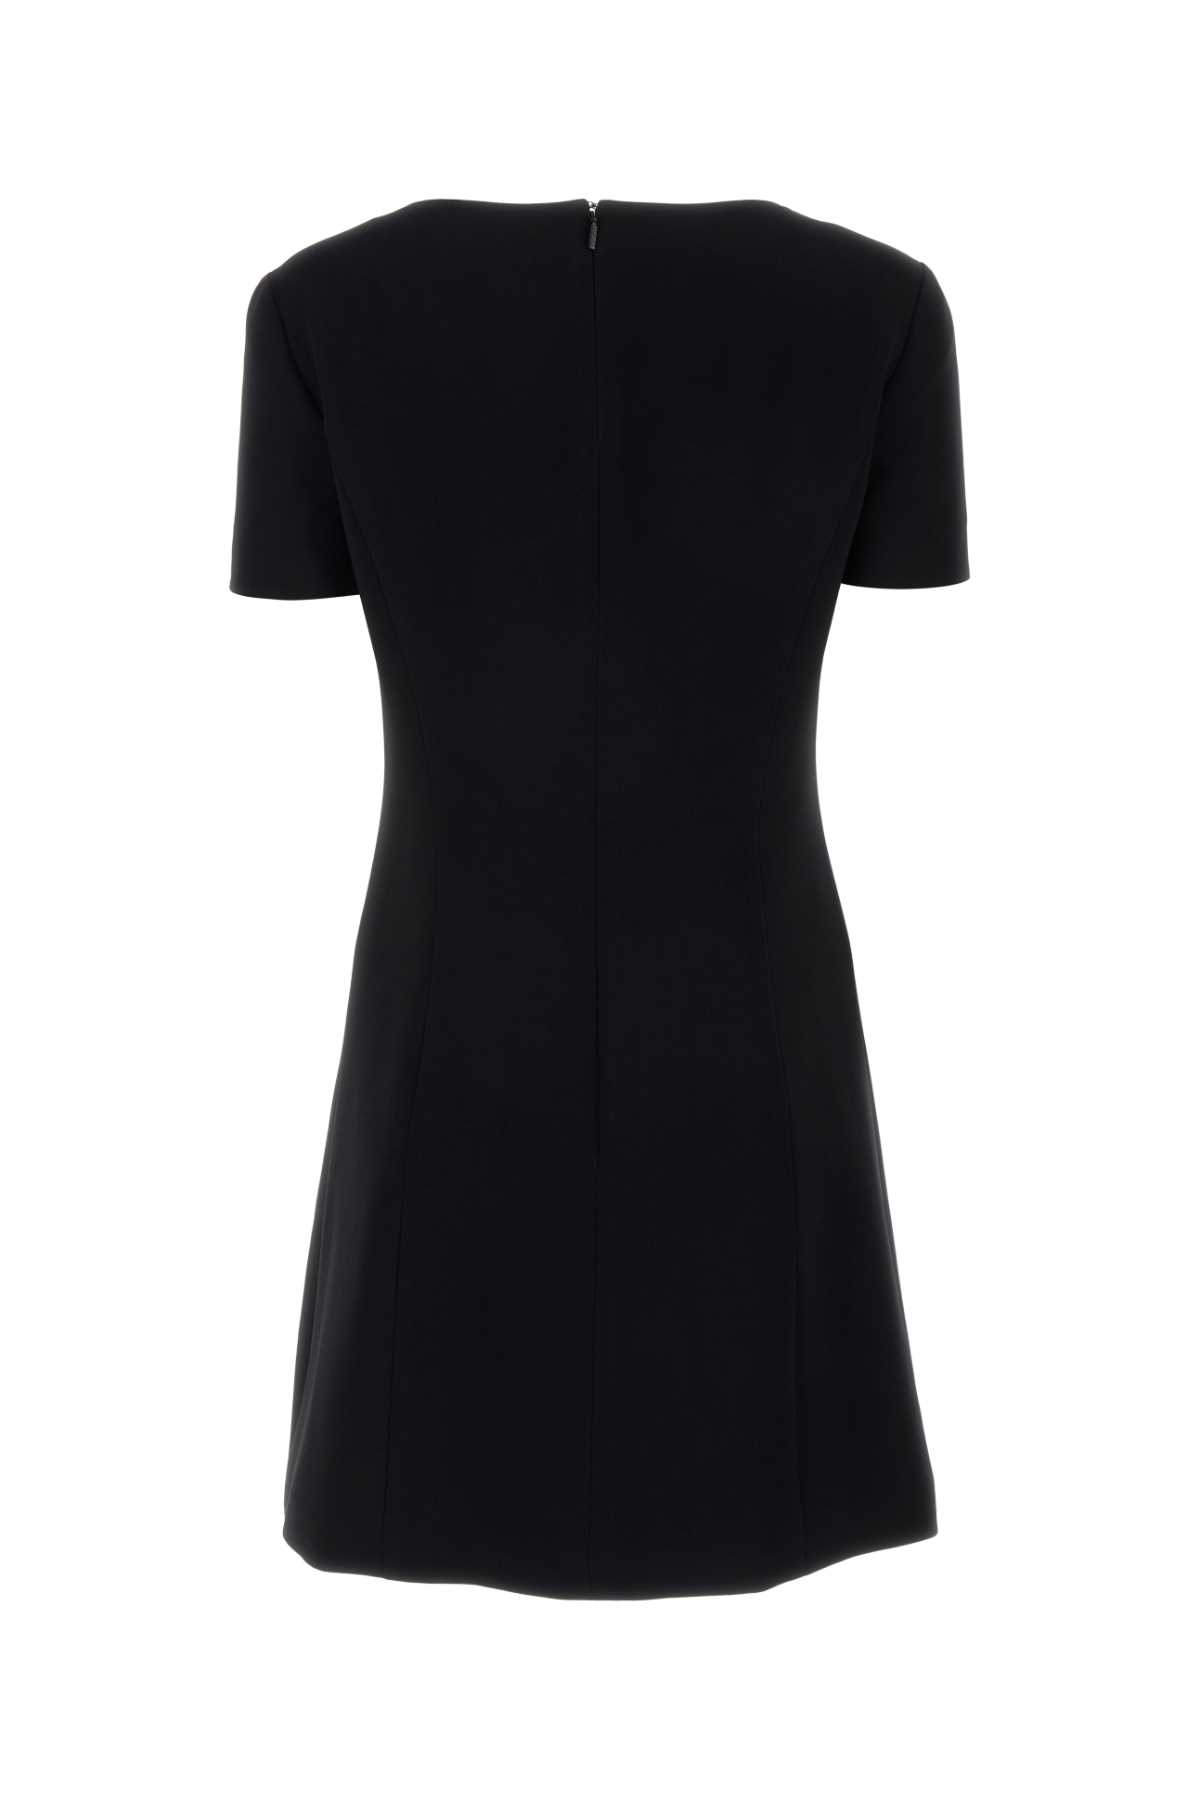 Versace Black Stretch Cady Mini Dress